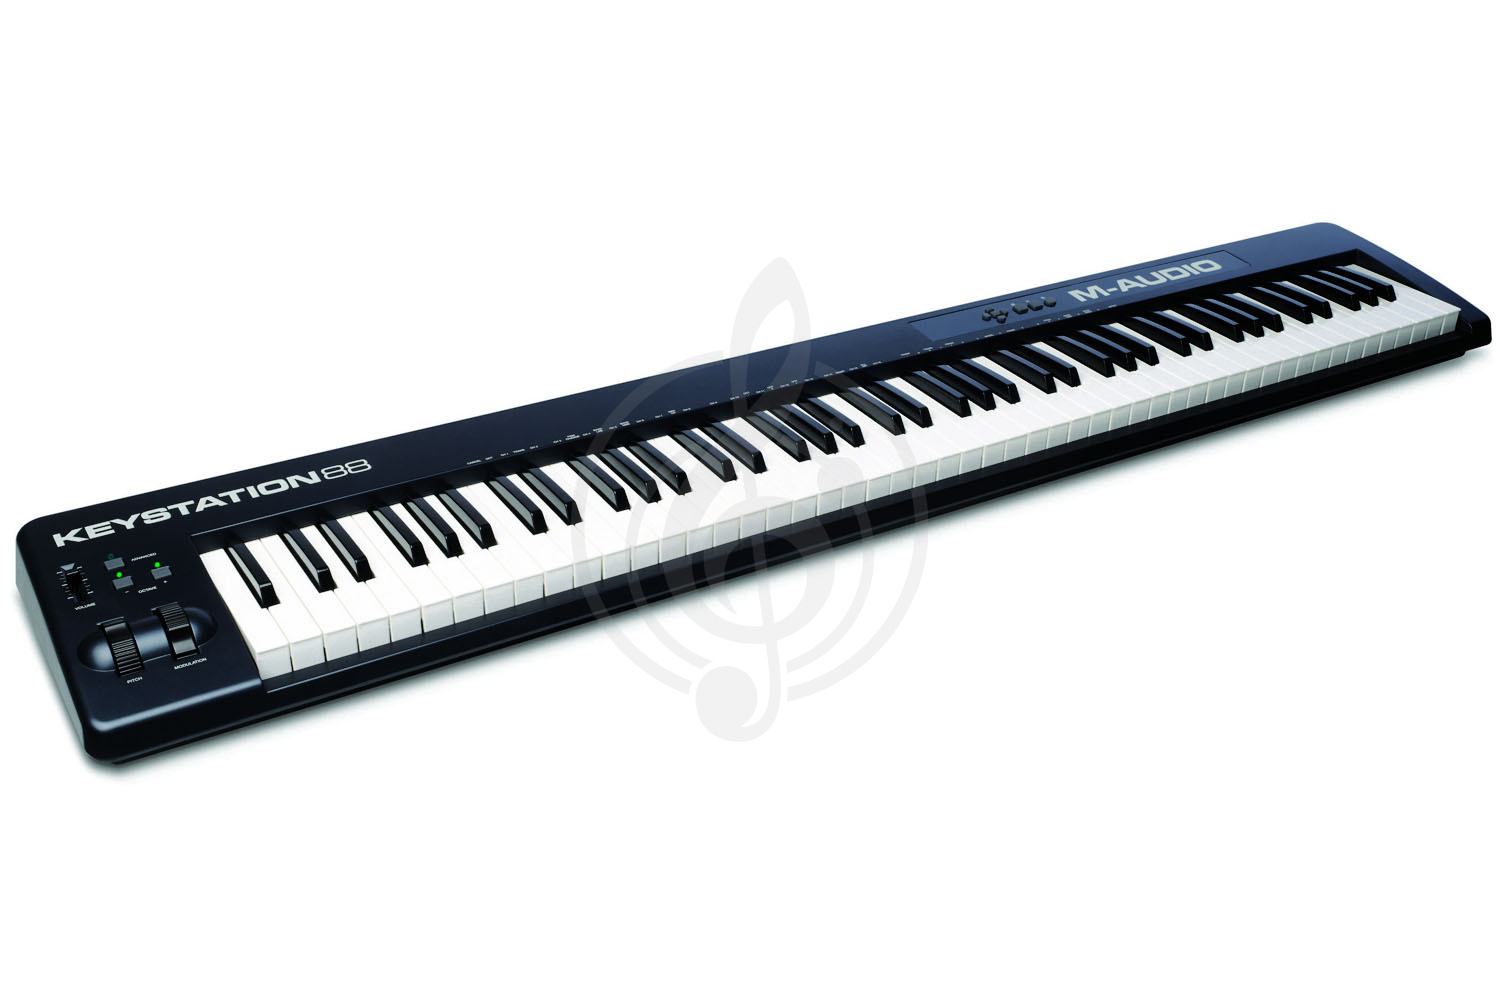 MIDI-клавиатура Миди-клавиатуры M-Audio M-Audio Keystation 88 II - USB миди-клавиатура Keystation 88 II - фото 1